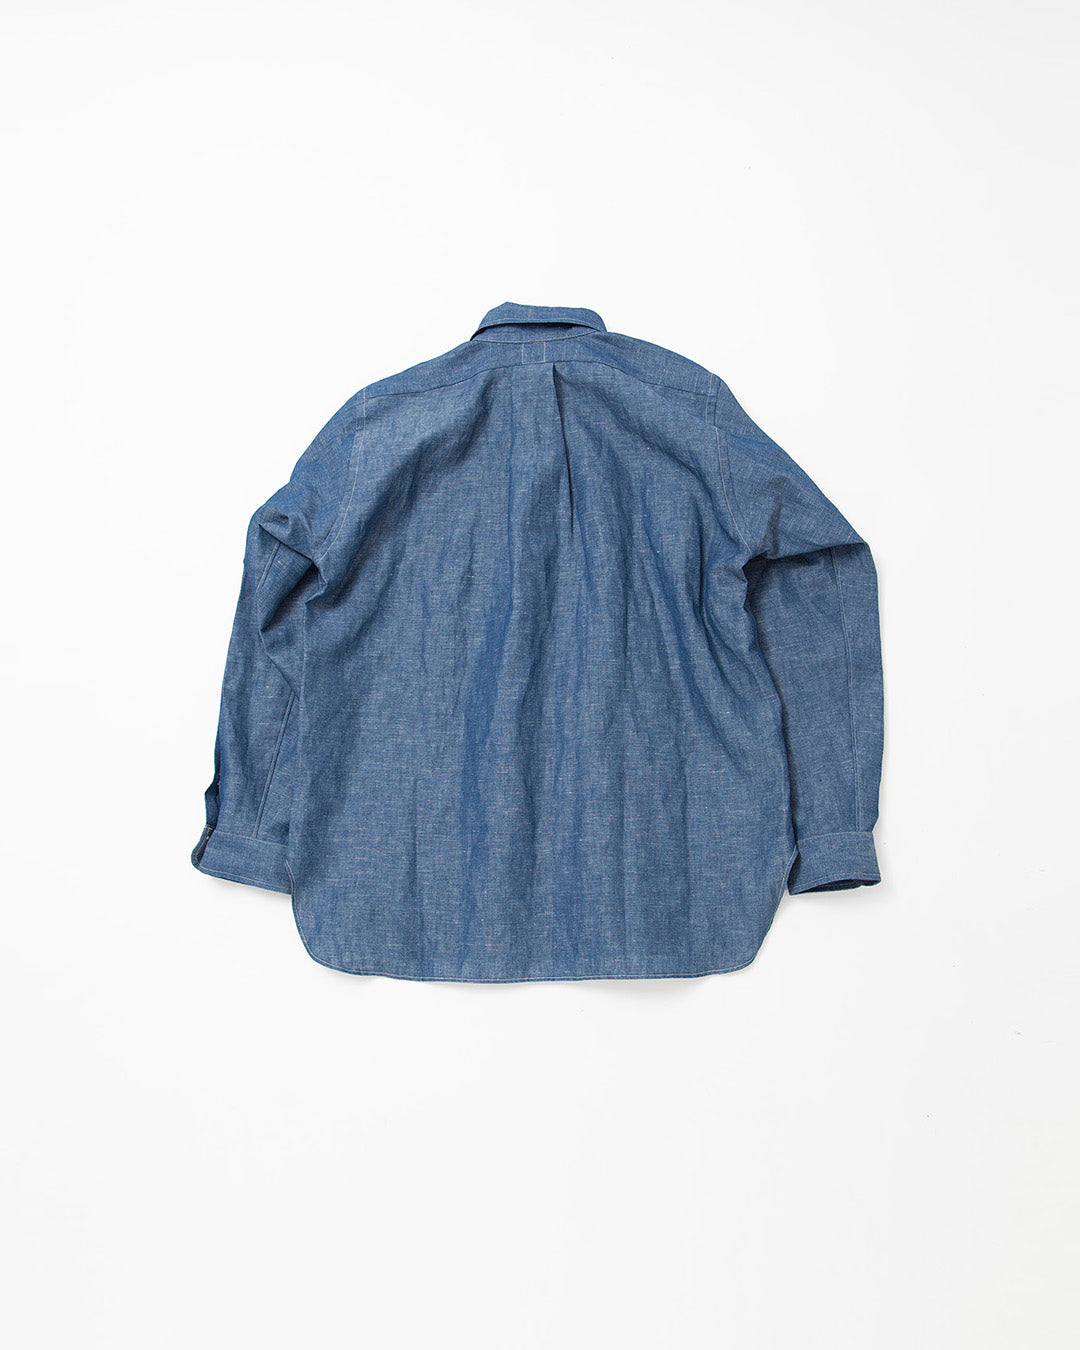 THE CORONA UTILITY - CS006・White Collar Work Shirt / Blue